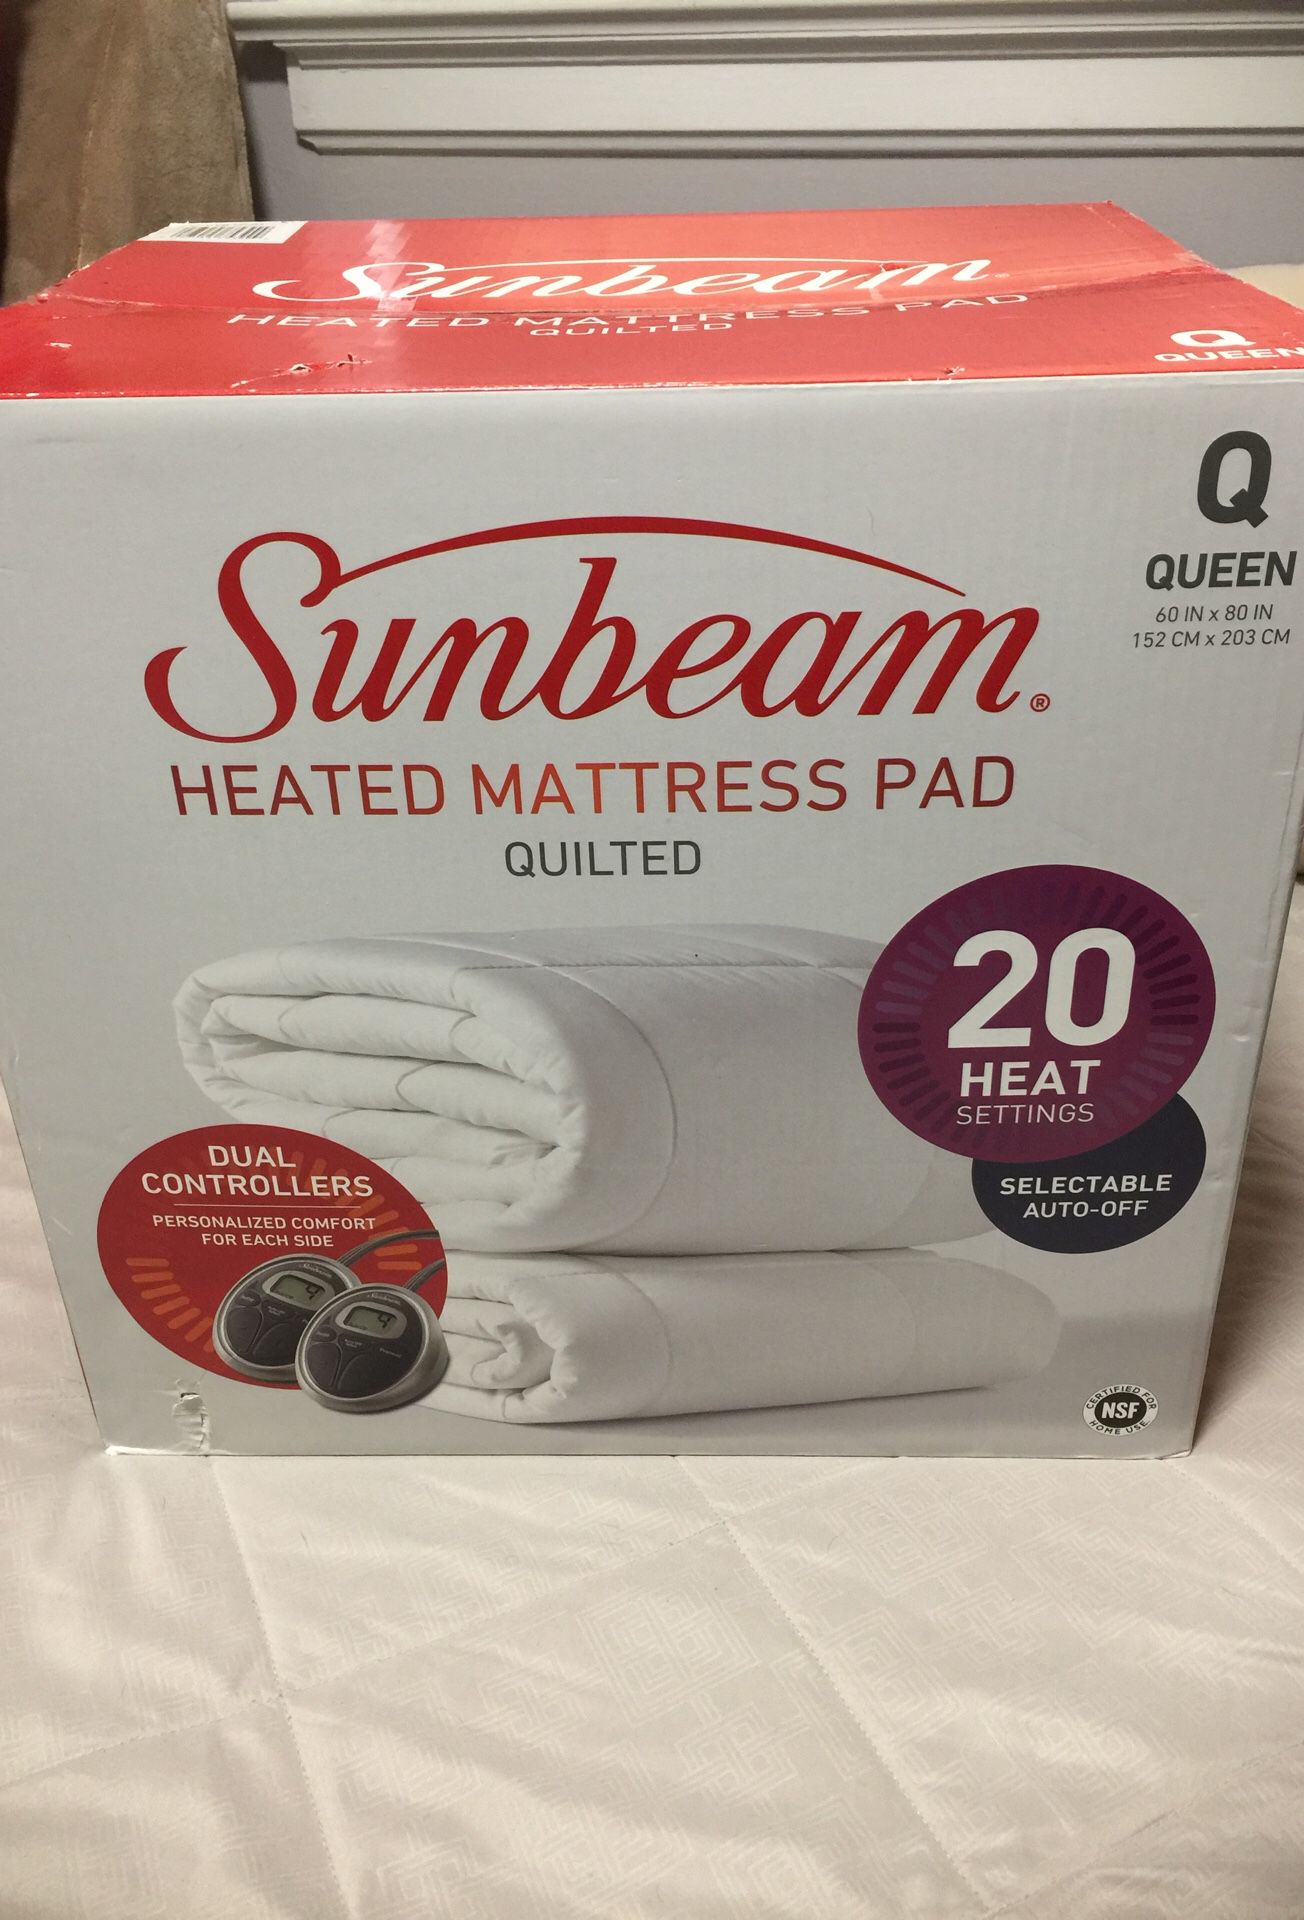 Heated mattress pad